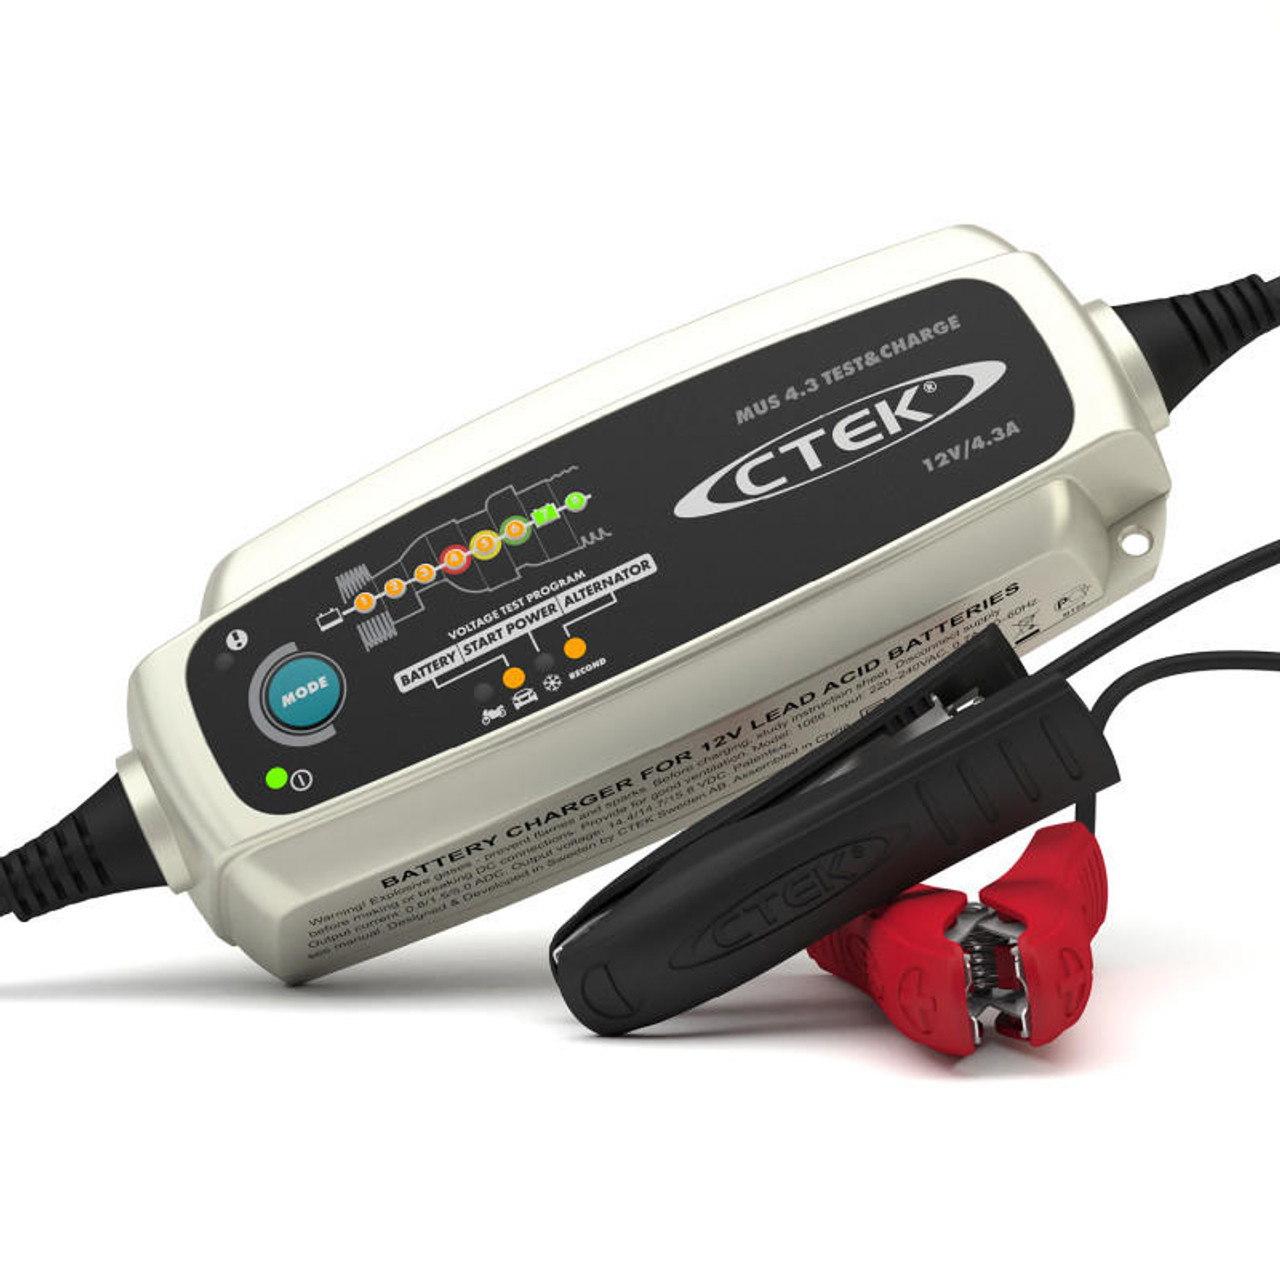  CTEK Battery Charger - MUS 4.3 Test & Charge - 12V - 56-959 